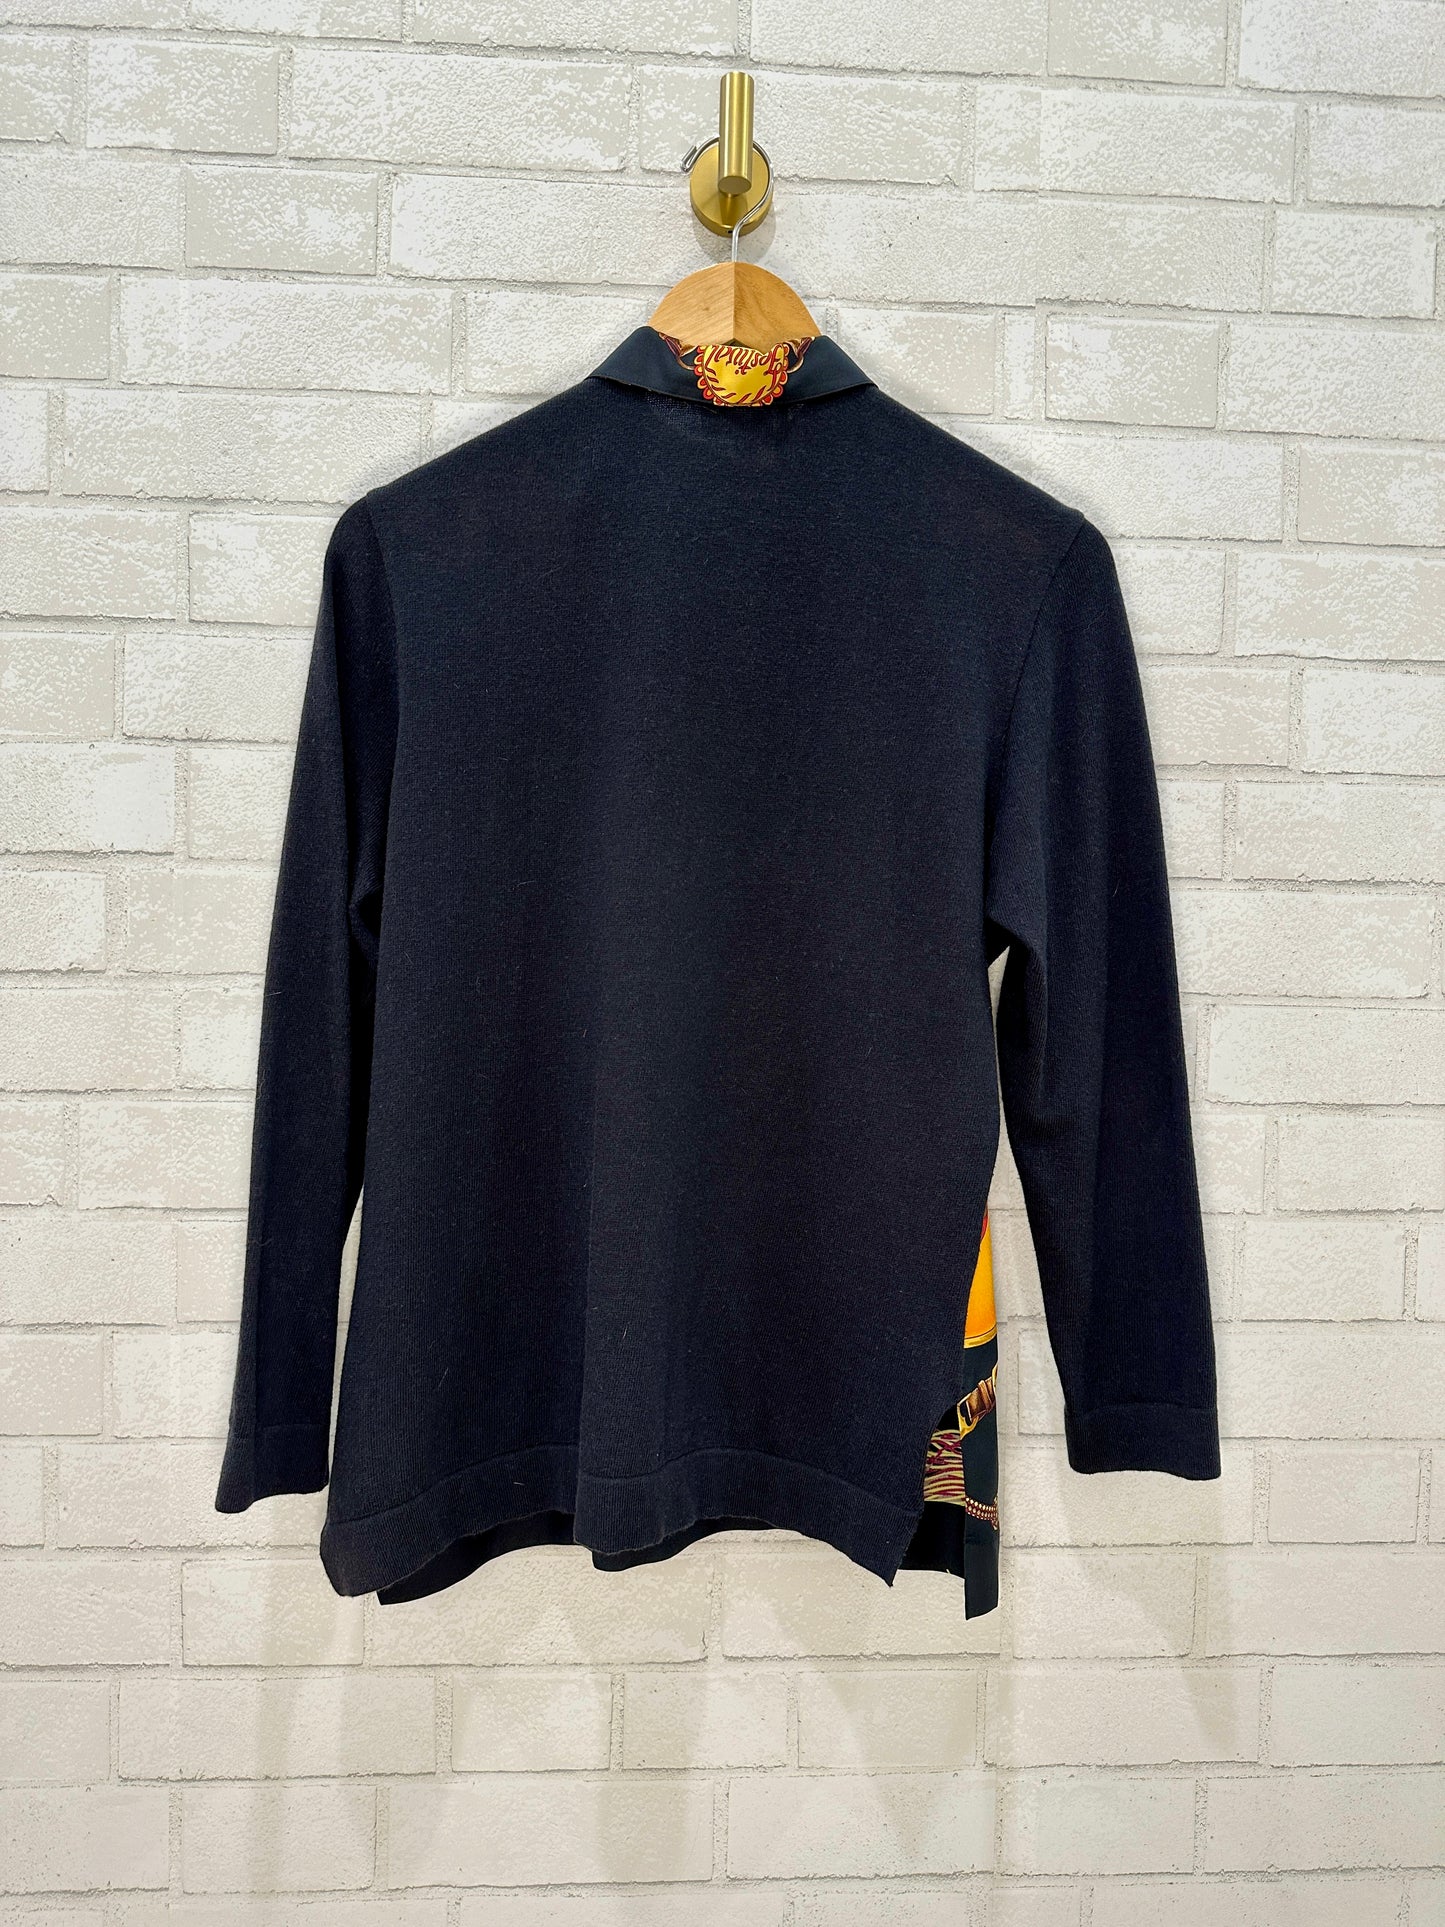 HERMES Vintage silk cotton shirt sweater / XS